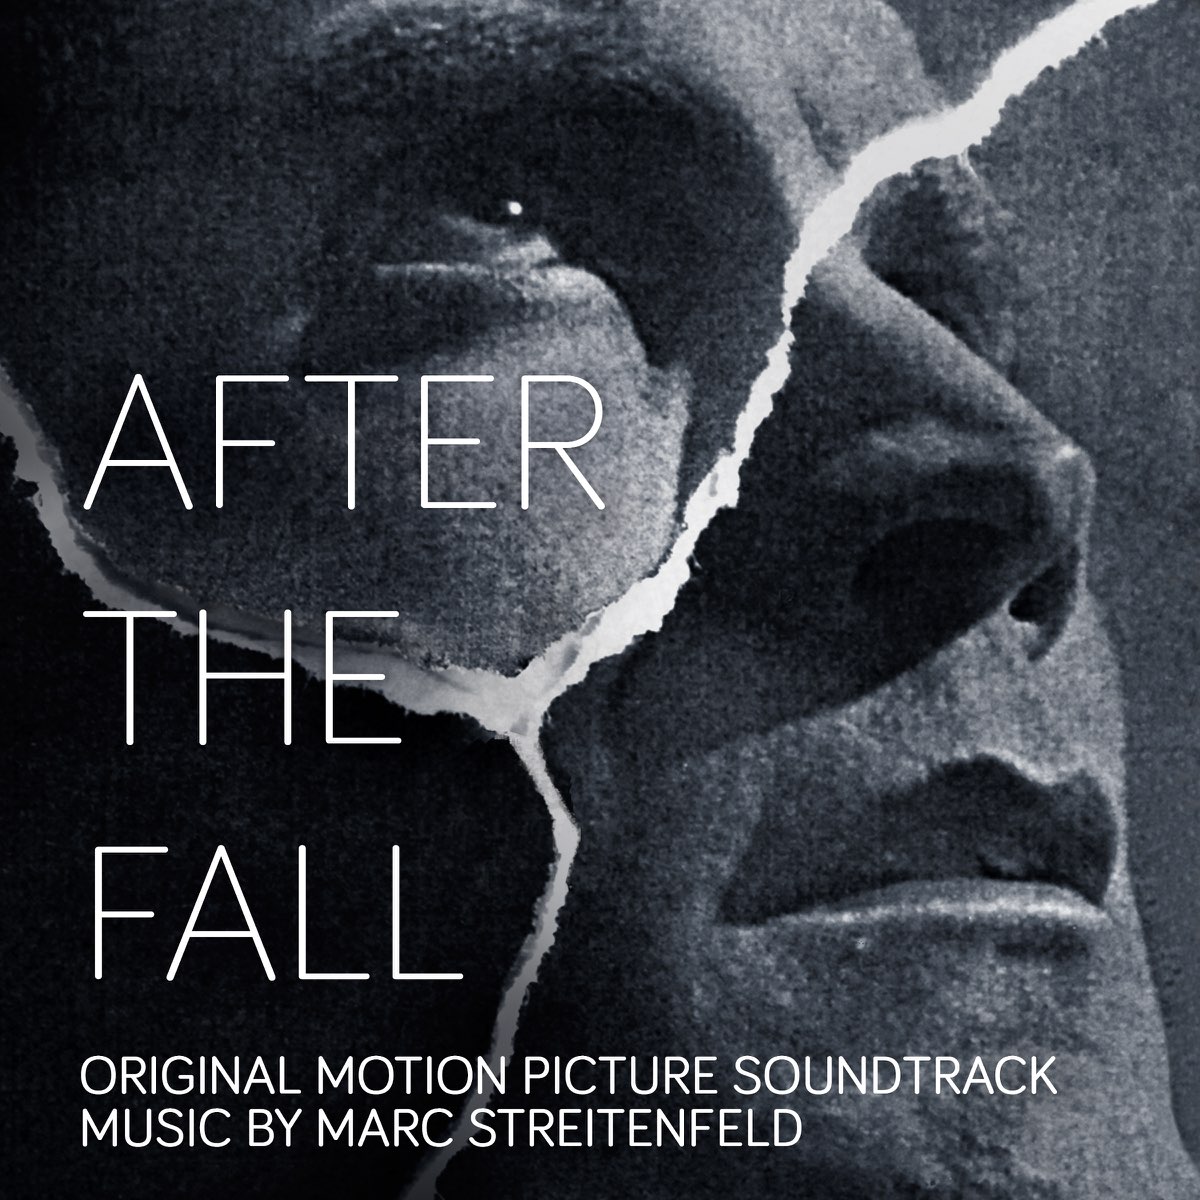 Marc Streitenfeld. Soundtrack the after. Ost fallen